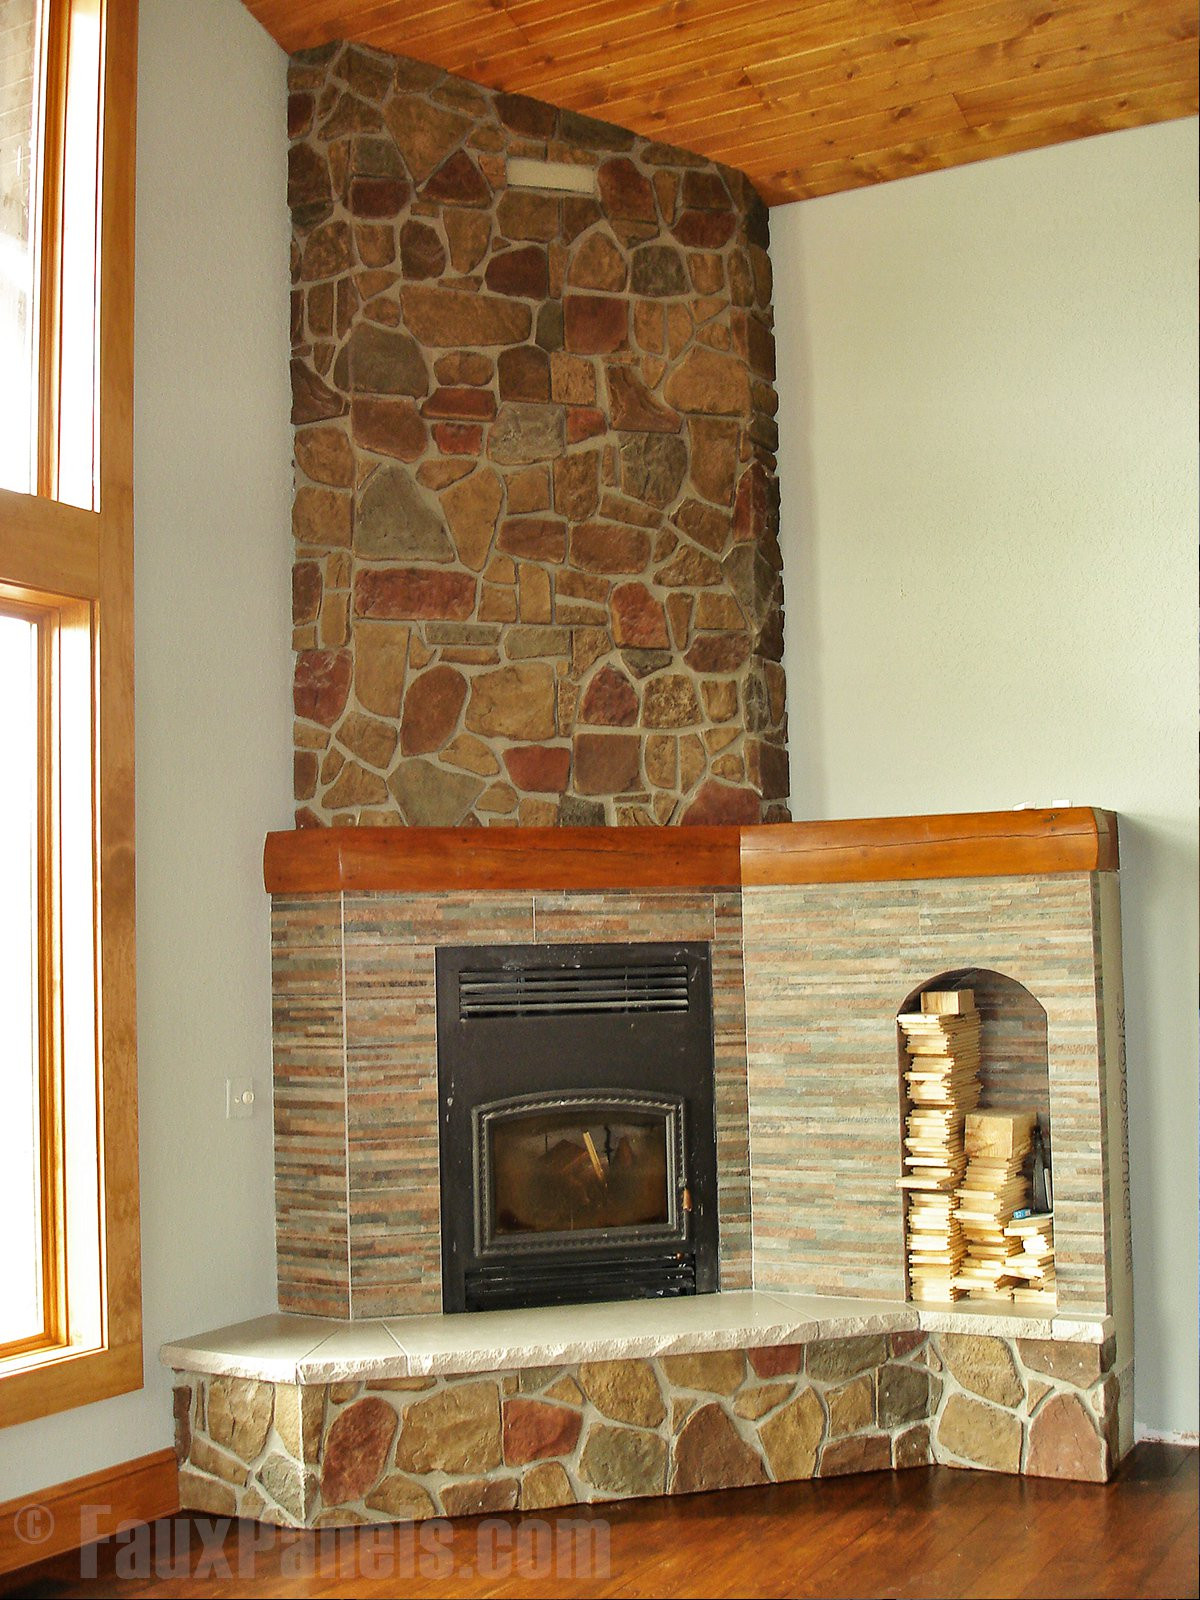 Best ideas about Corner Fireplace Ideas
. Save or Pin Cozy Corner Fireplace Ideas Now.